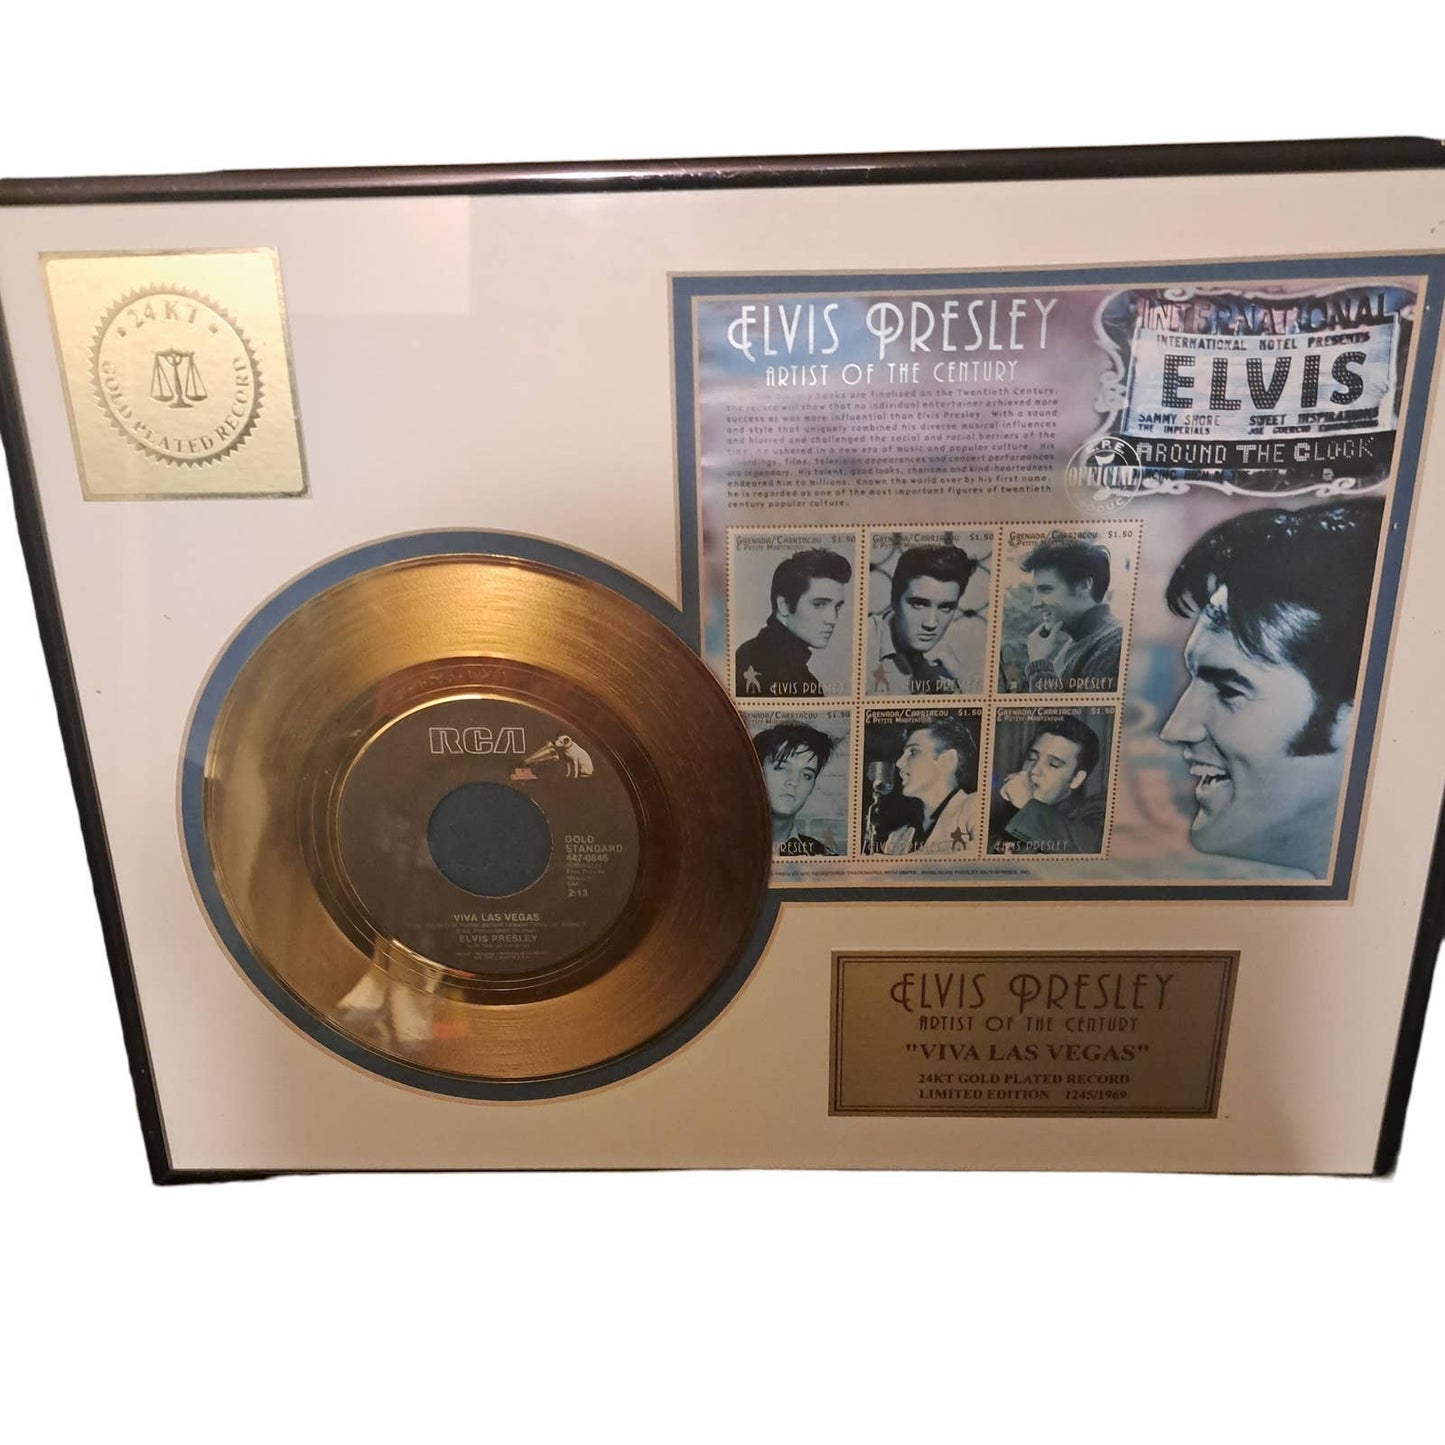 RARE!!! ELVIS PRESLEY Viva Las Vegas 24kt GOLD by Elvis Presley Enterprises